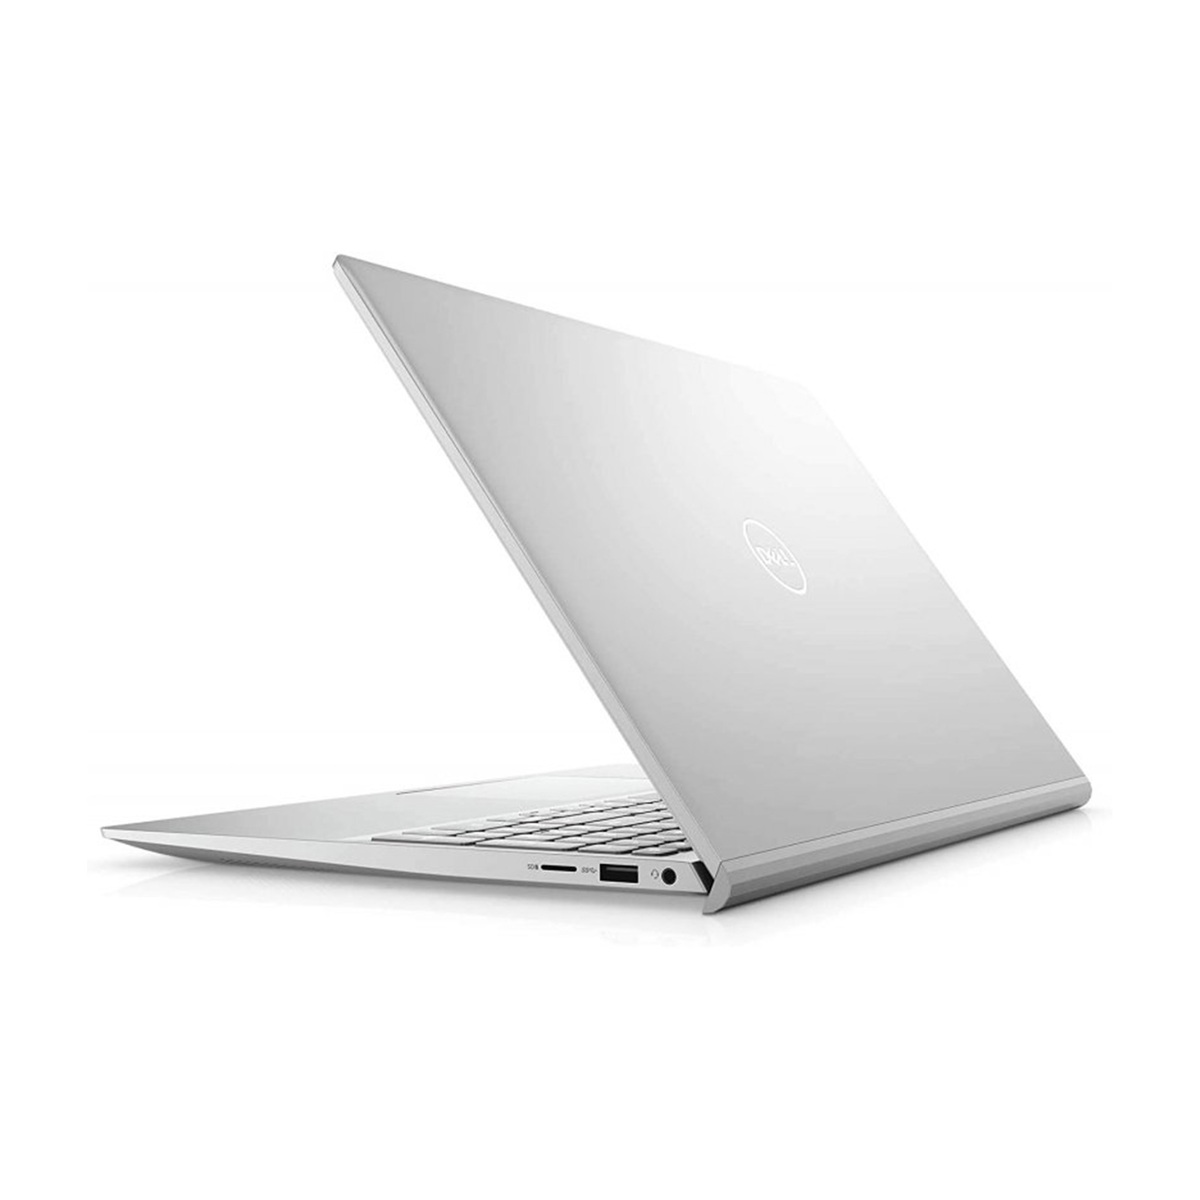 Dell Inspiron 5401-INS-404P Laptop,Core i7-1065G7, 8GB RAM, 512GB SSD, 2GB Nvidia Graphics, Windows 10 ,14inch,Silver